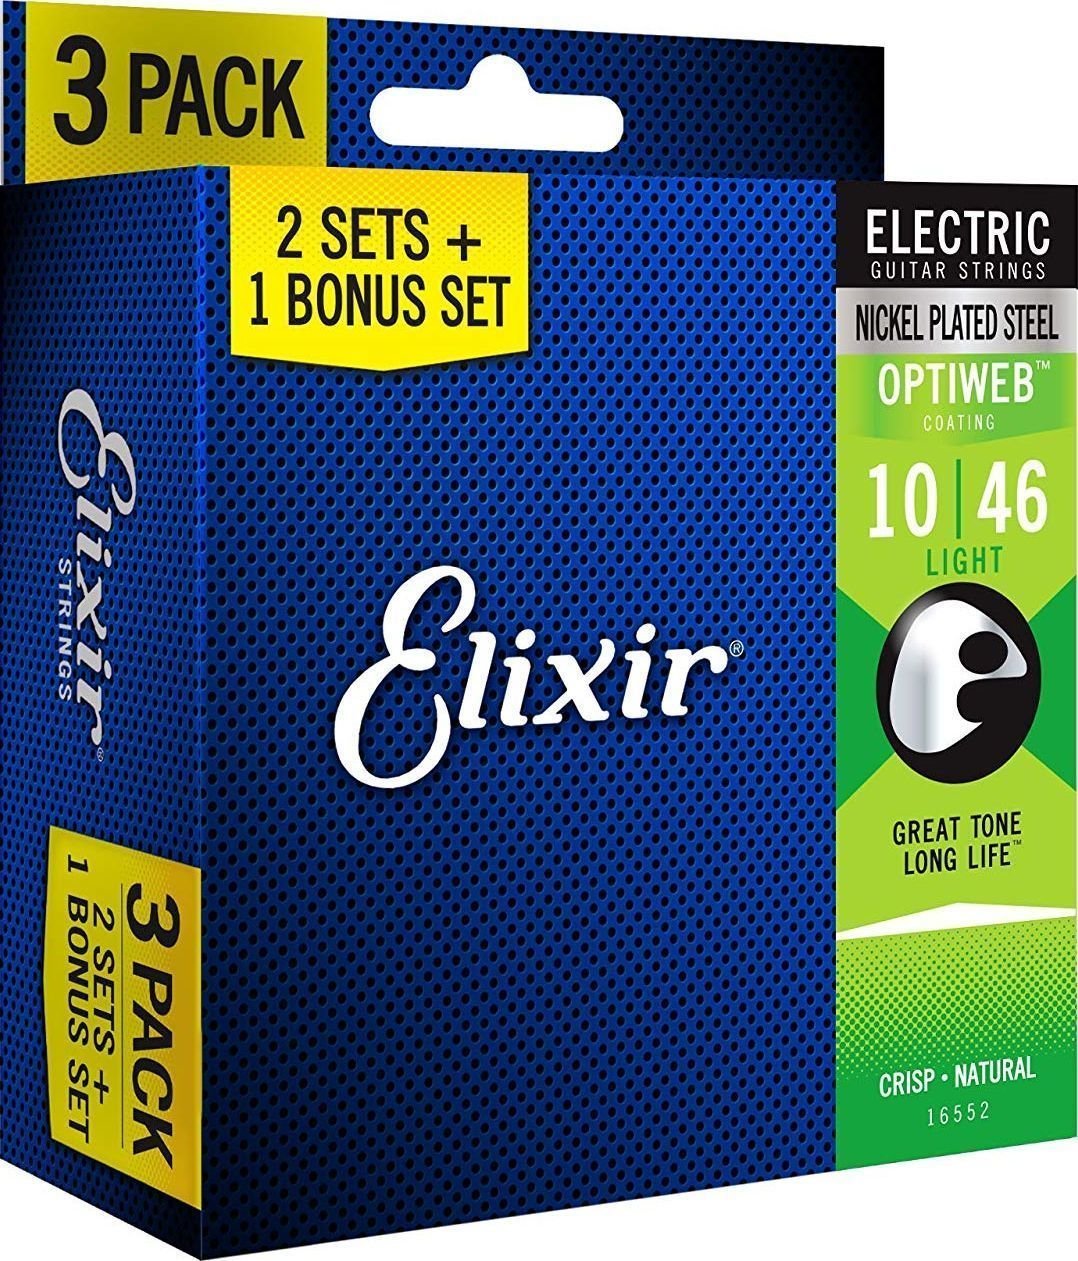 E-gitarrsträngar Elixir 16552 OPTIWEB Coating Light 10-46 3-PACK